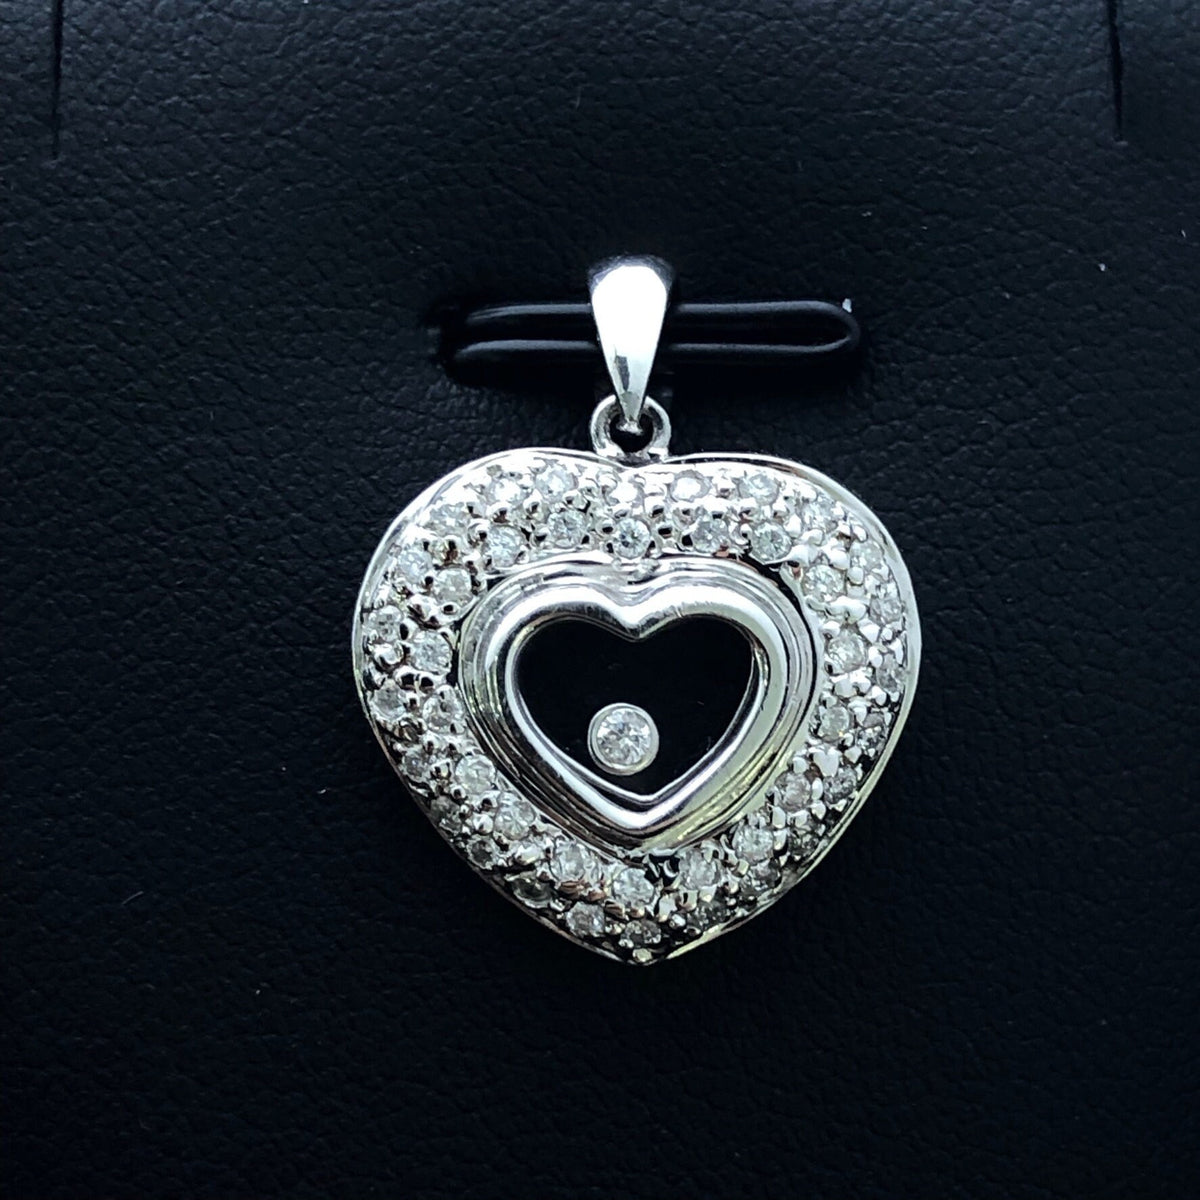 LIV 14k White Gold & Diamonds G/VS1 Floating Heart Design Halo Pendant Necklace Gift